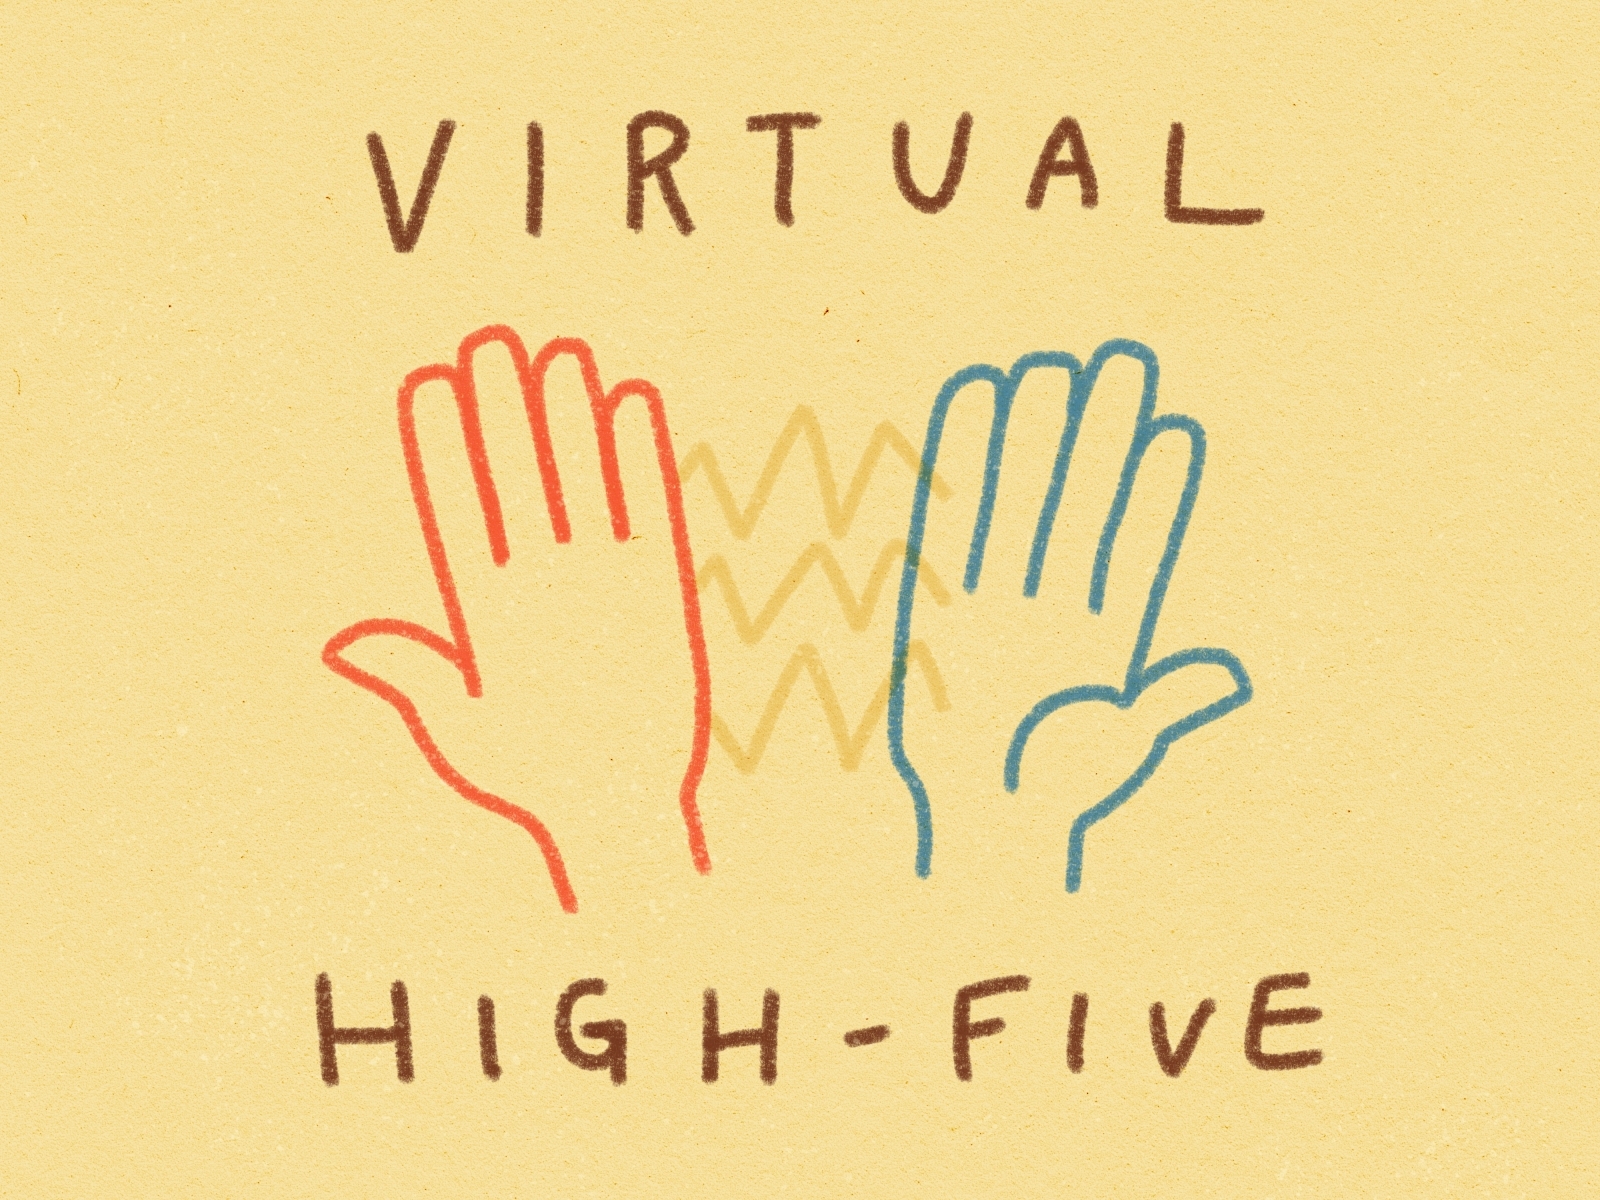 Virtual HighFive by Sean Fournier on Dribbble